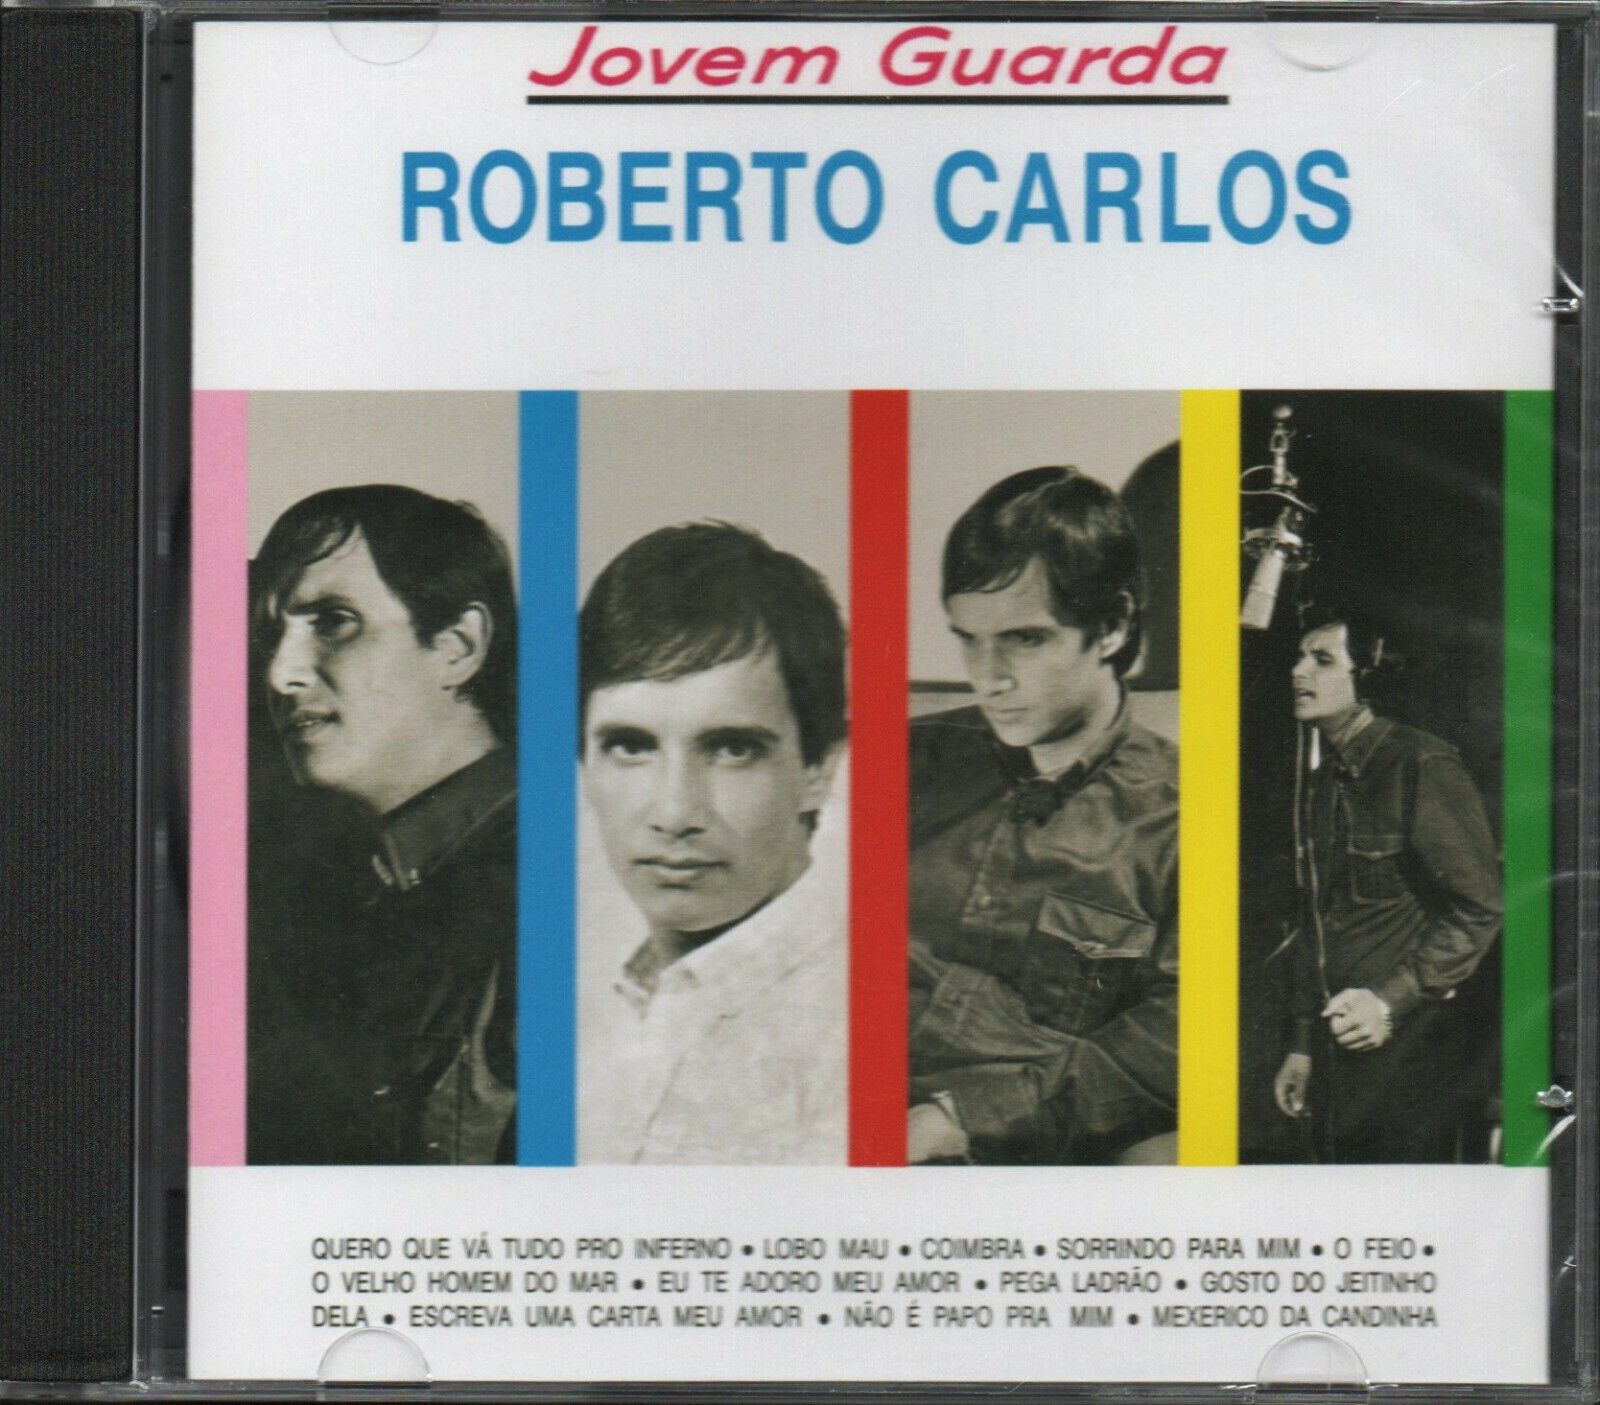 Roberto Carlos CD Jovem Guarda 1965 Portuguese Edition Made In Brazil